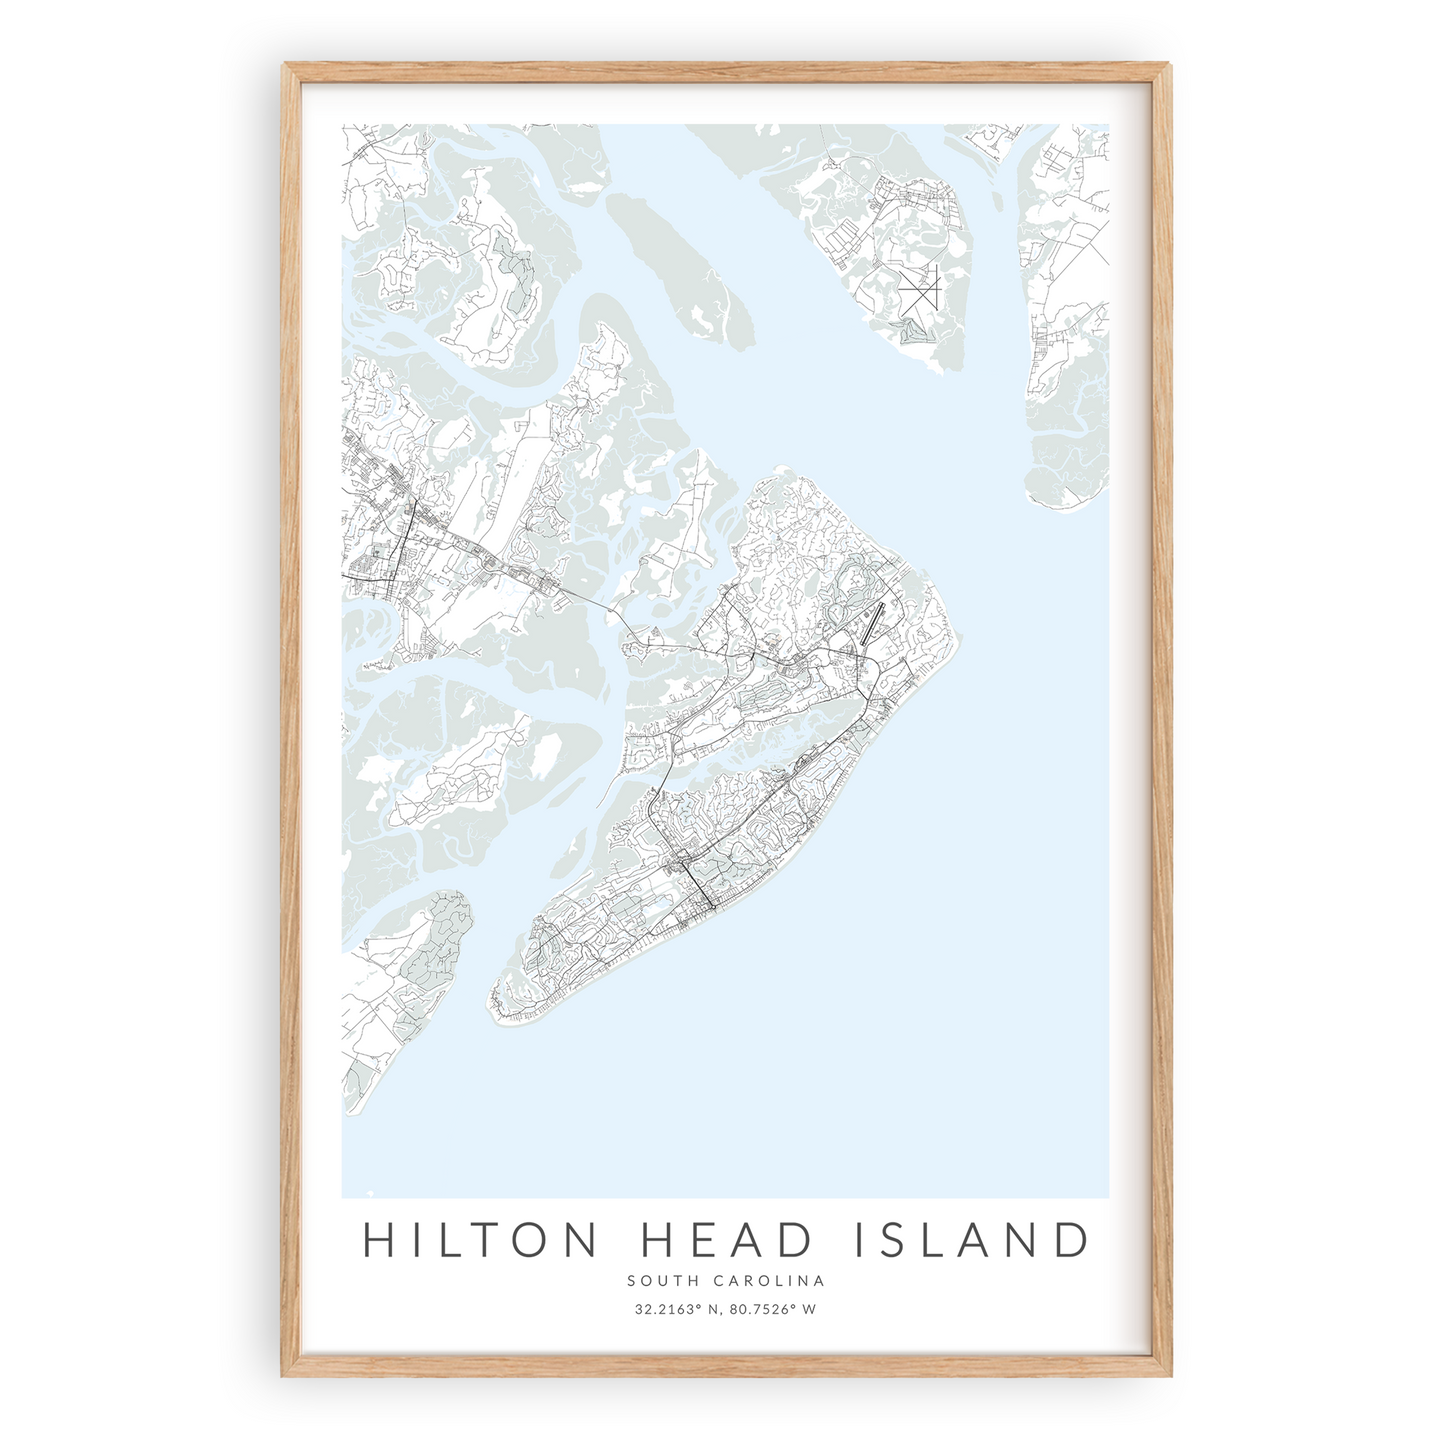 hilton head island south carolina map in wood frame